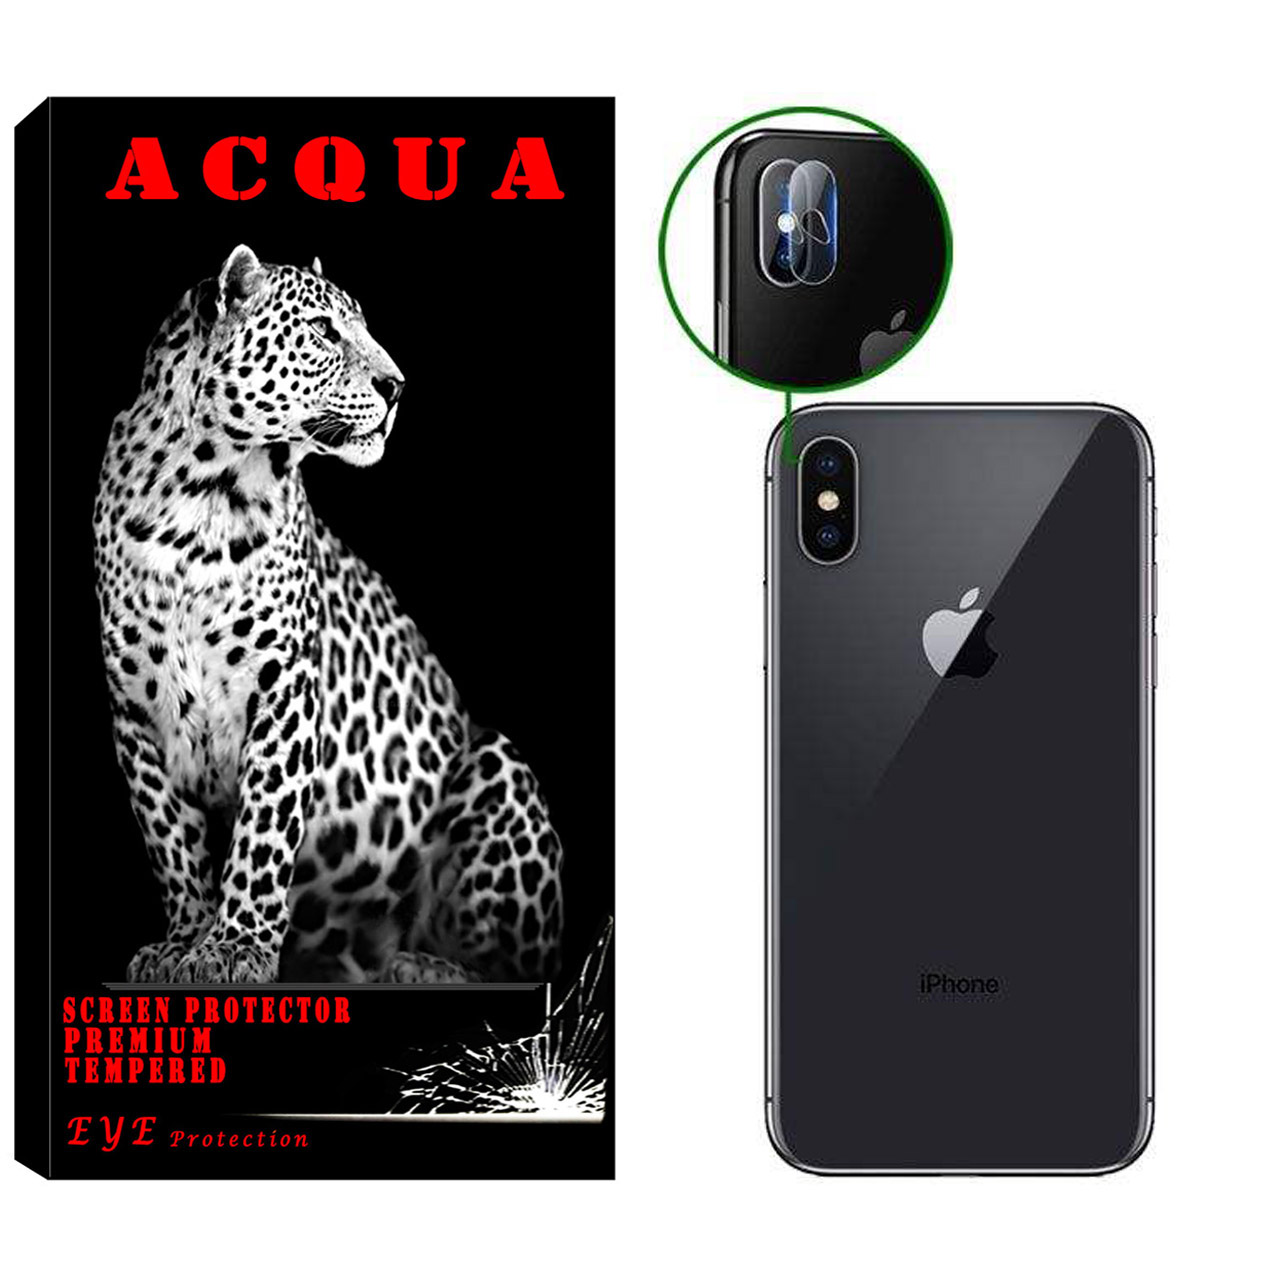 محافظ لنز دوربین آکوا مدل LN مناسب برای گوشی موبایل اپل iPhone X/XS